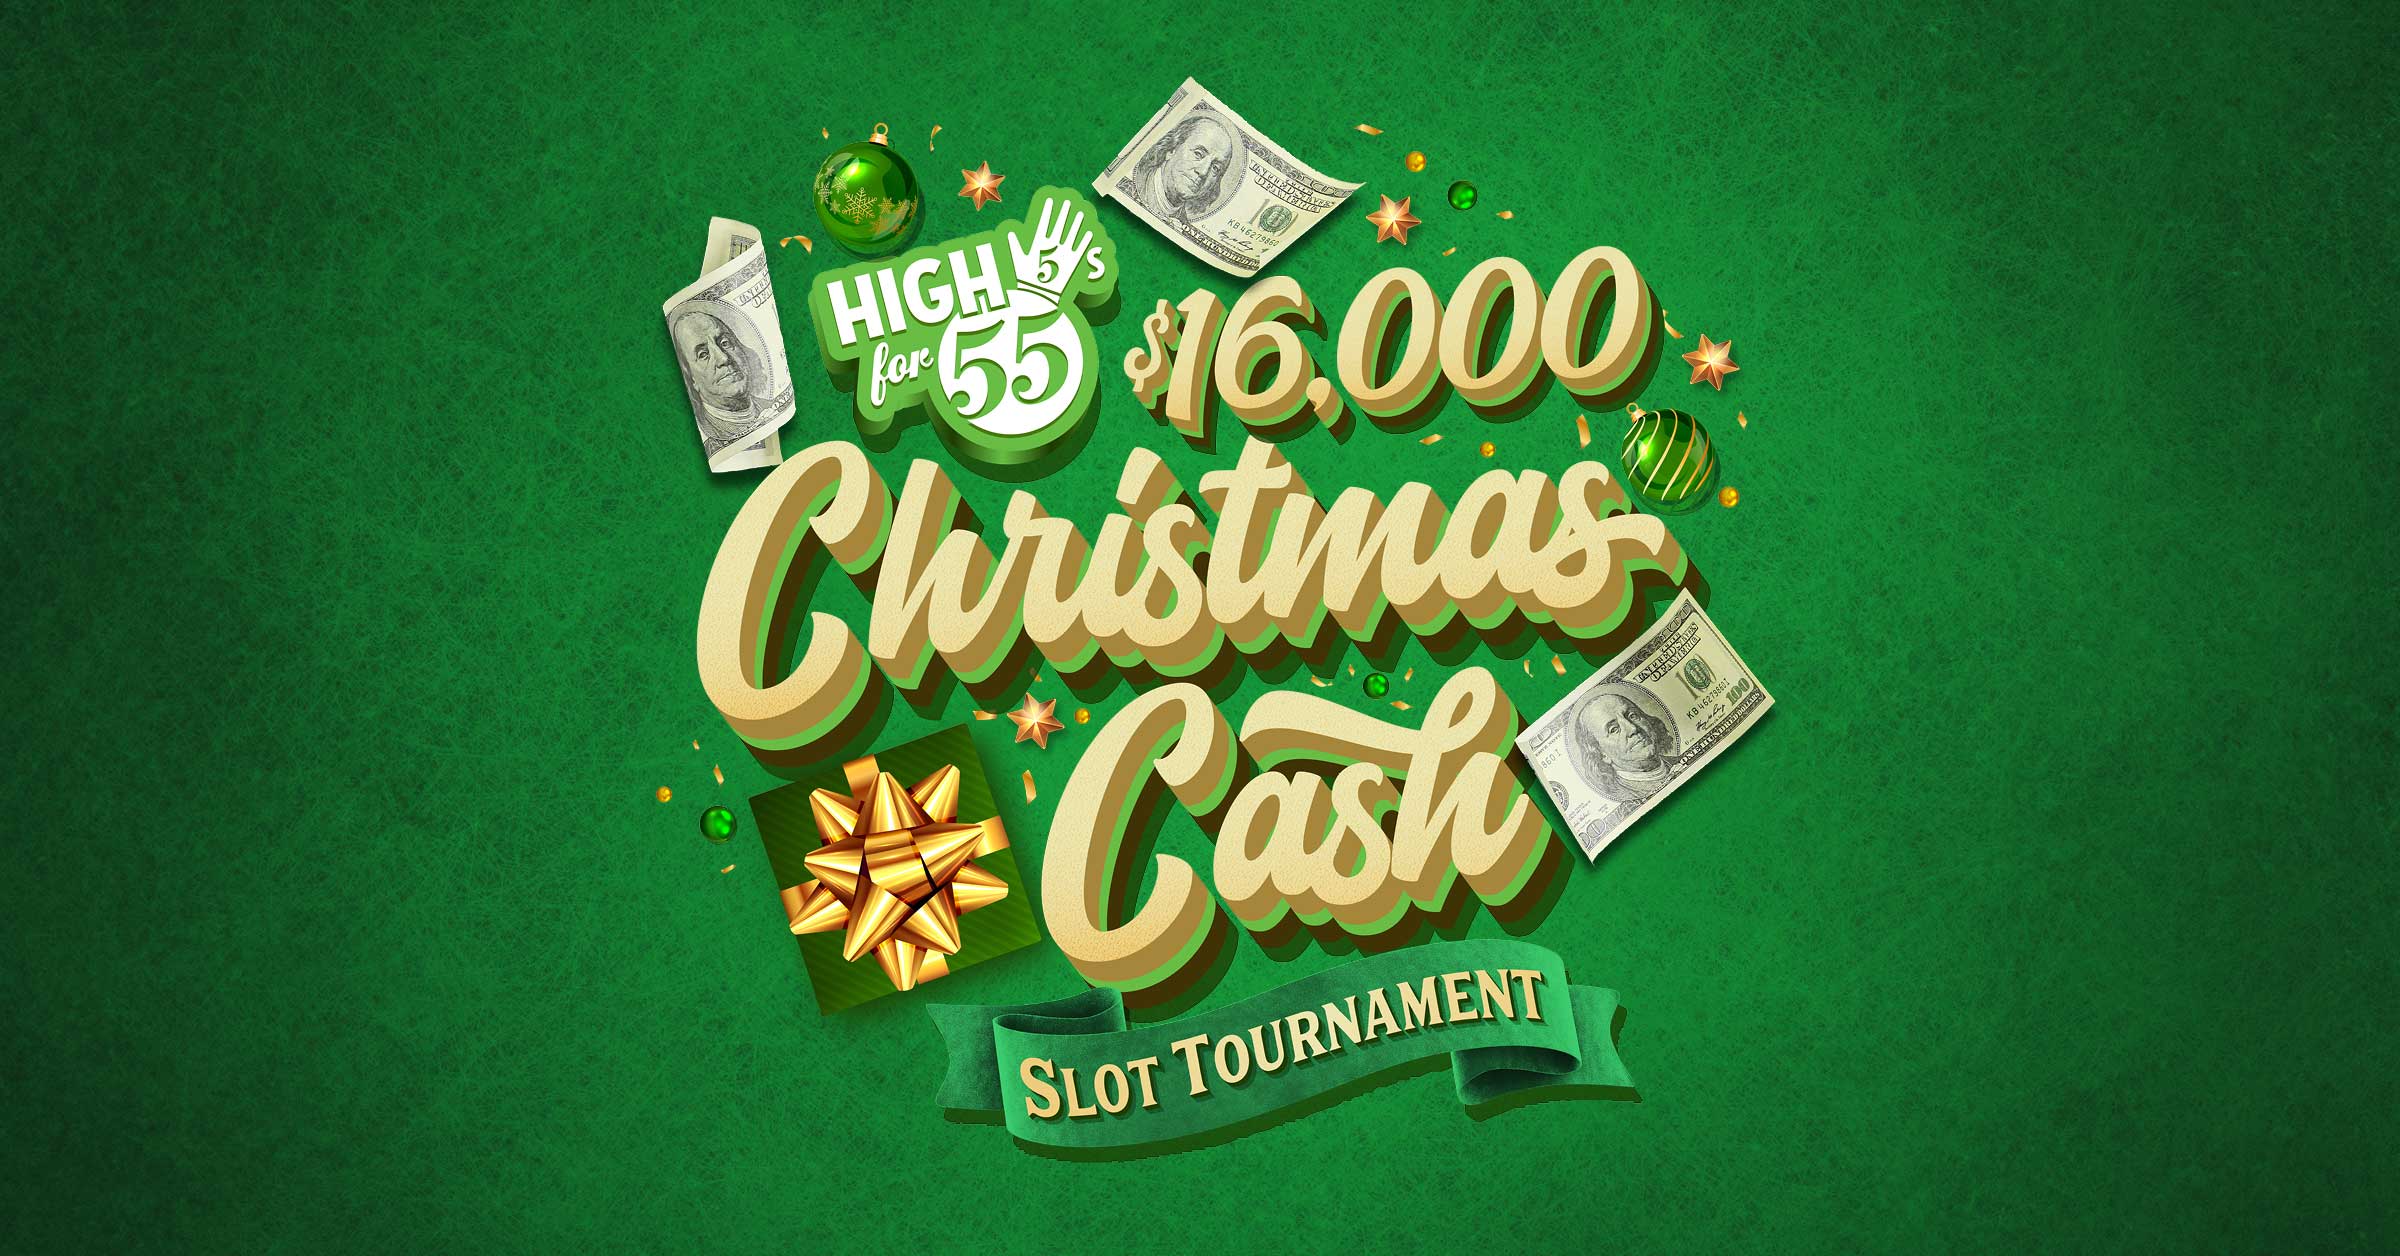 High 5s for 55 – $16,000 Christmas Cash Slot Tournament